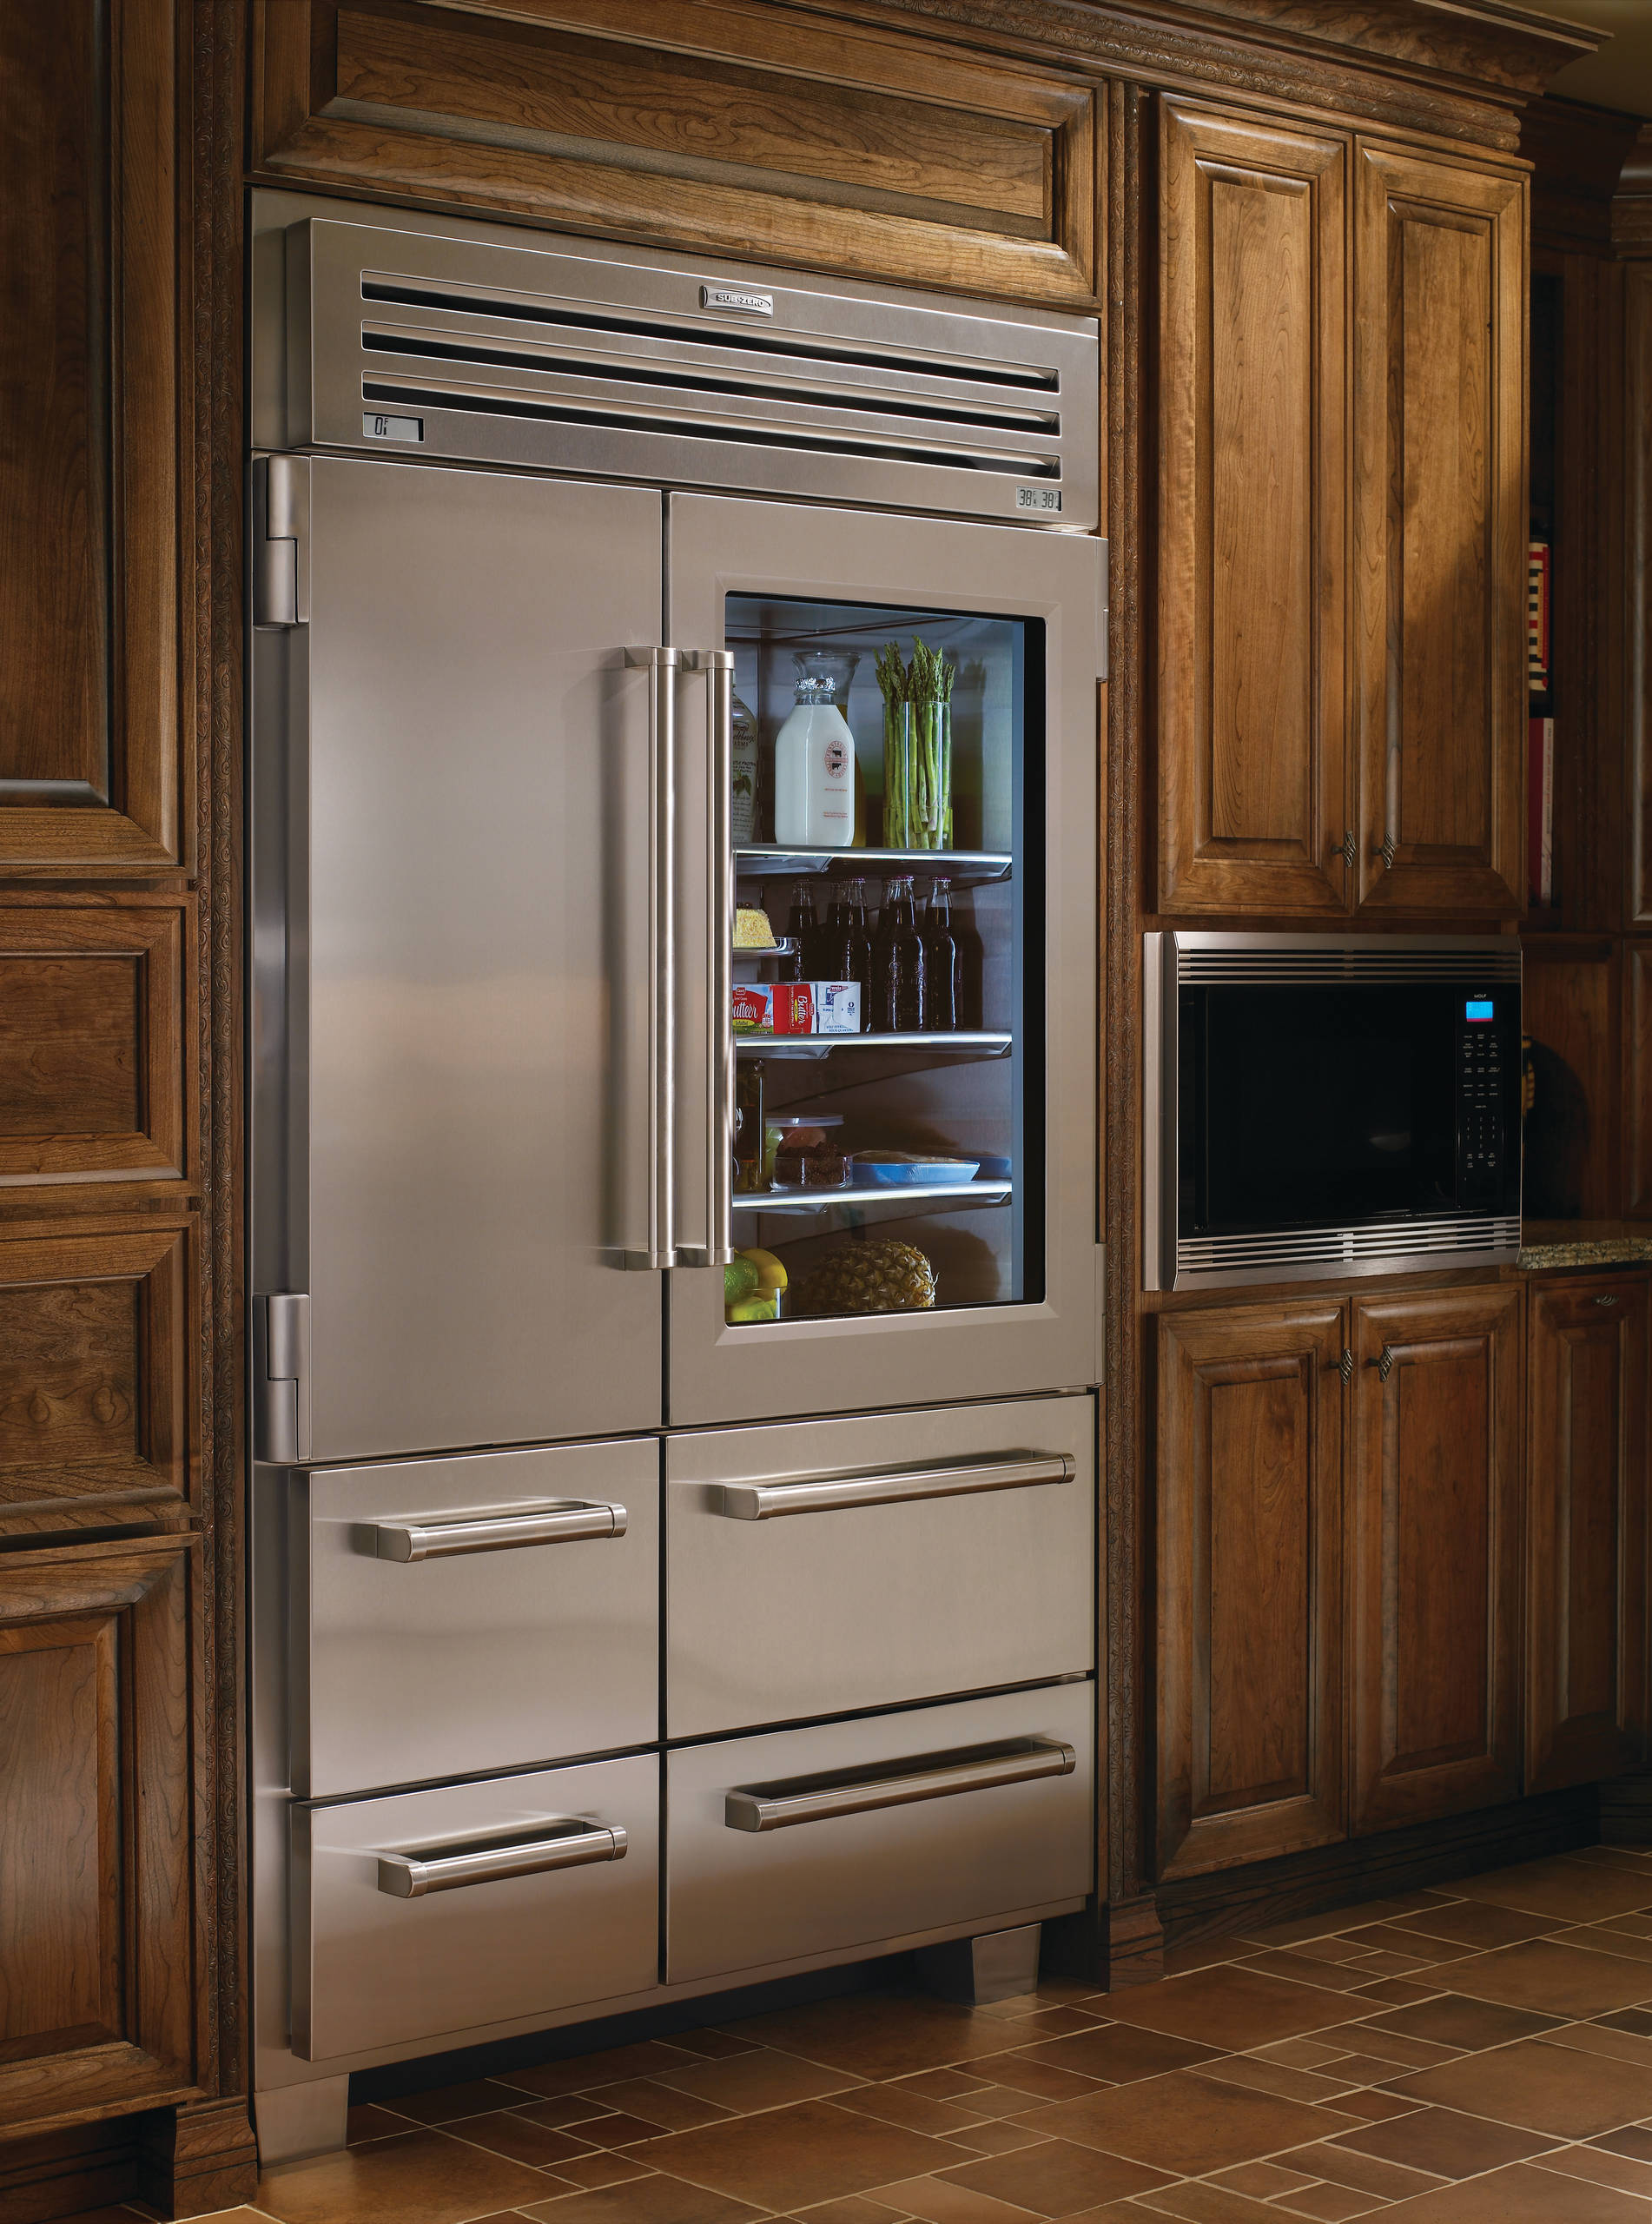 Cupboard glass fridge cooker. Встраиваемый холодильник Side by Side. Холодильник Subzero (модель 700tr 2). Встраиваемый холодильник sub-Zero. Встроенный холодильник Side by Side.